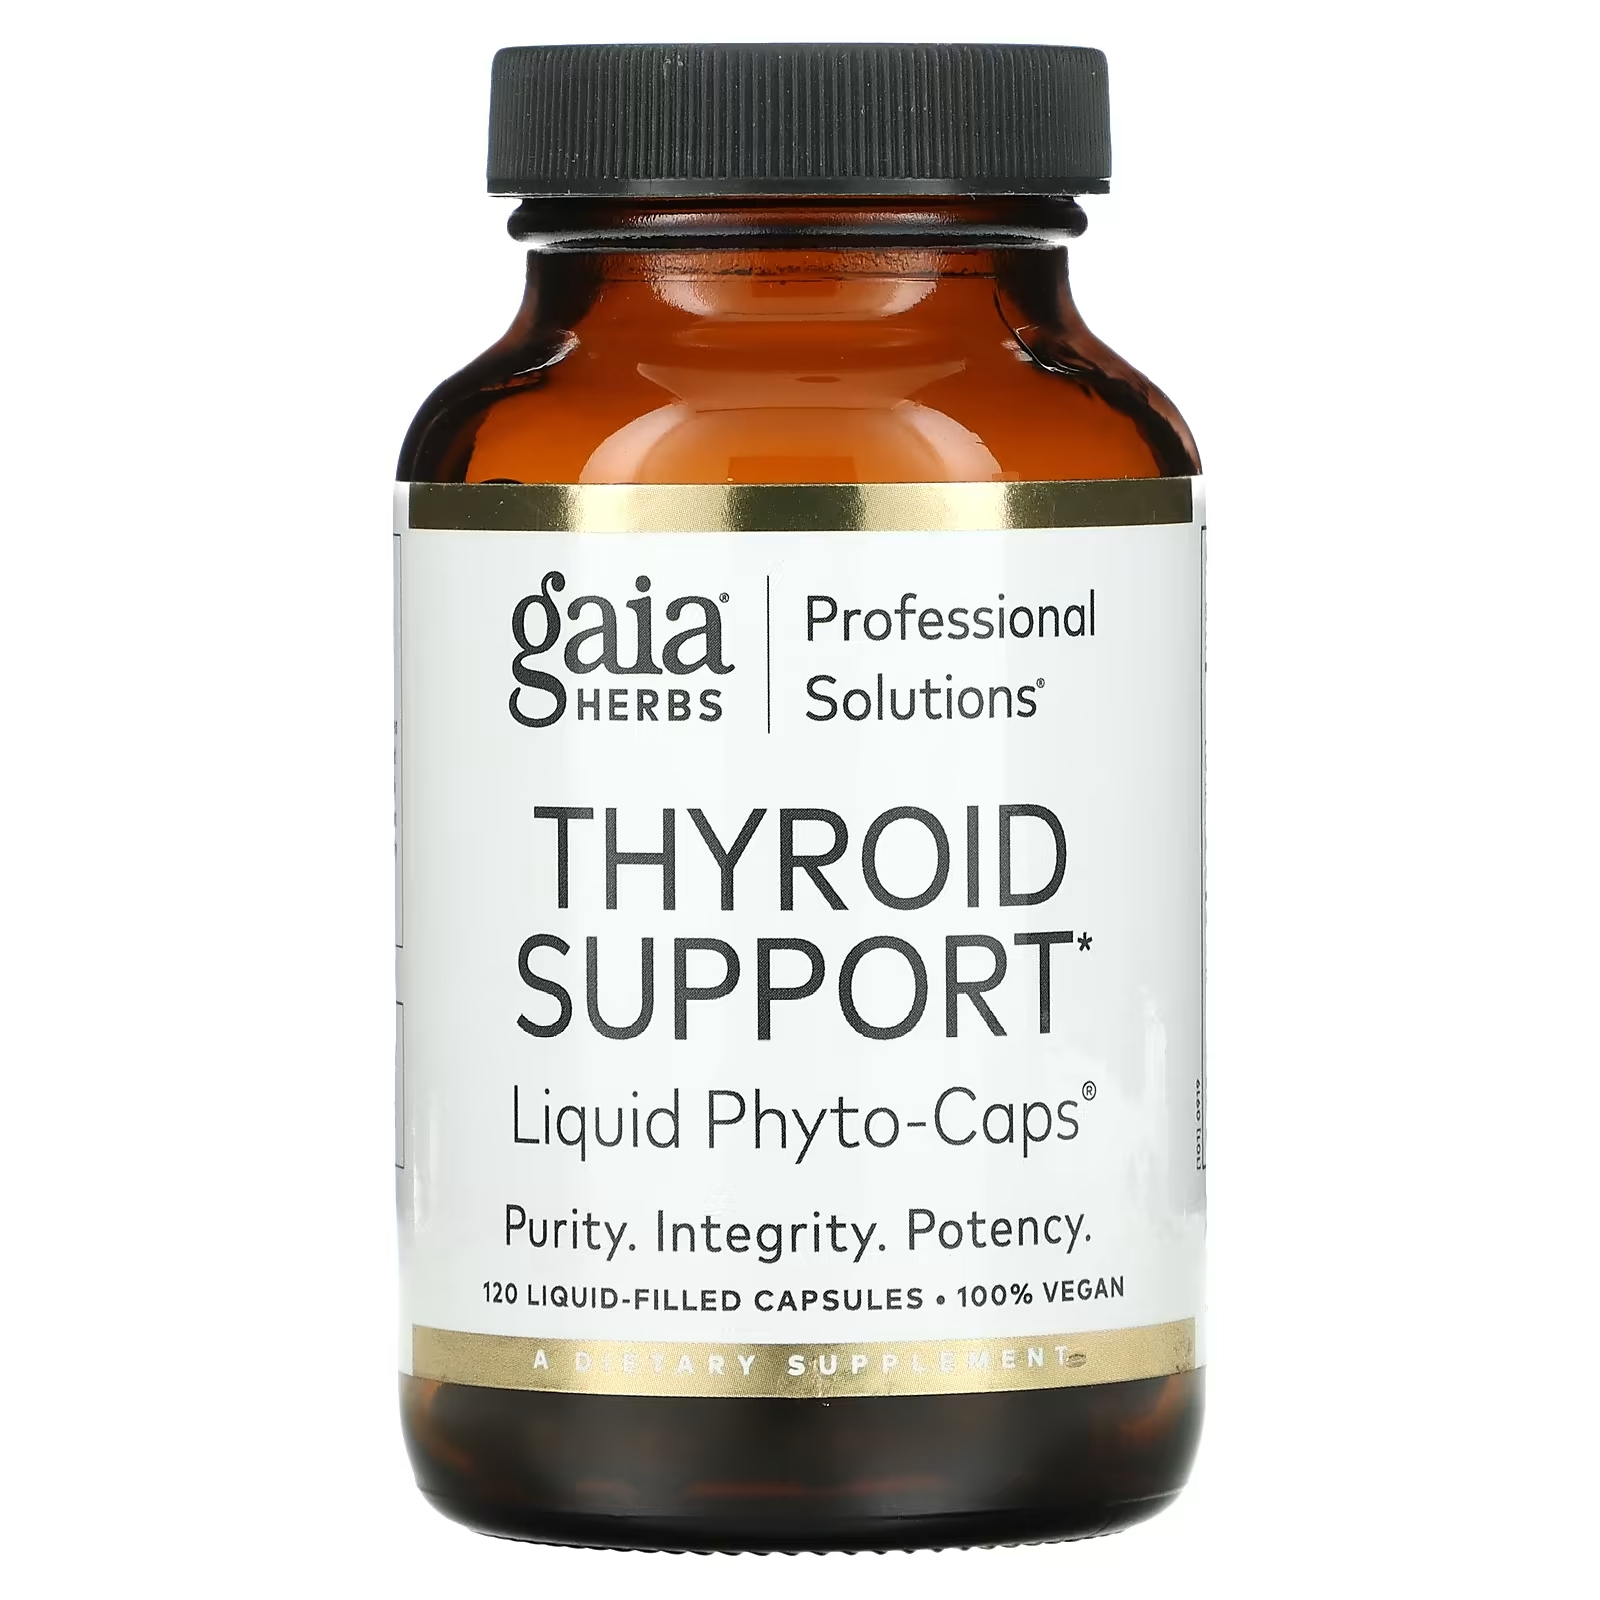 Gaia Herbs Professional Solutions Средство для поддержки щитовидной железы, 120 капсул gaia herbs средство для поддержки щитовидной железы 60 веганских капсул phyto cap